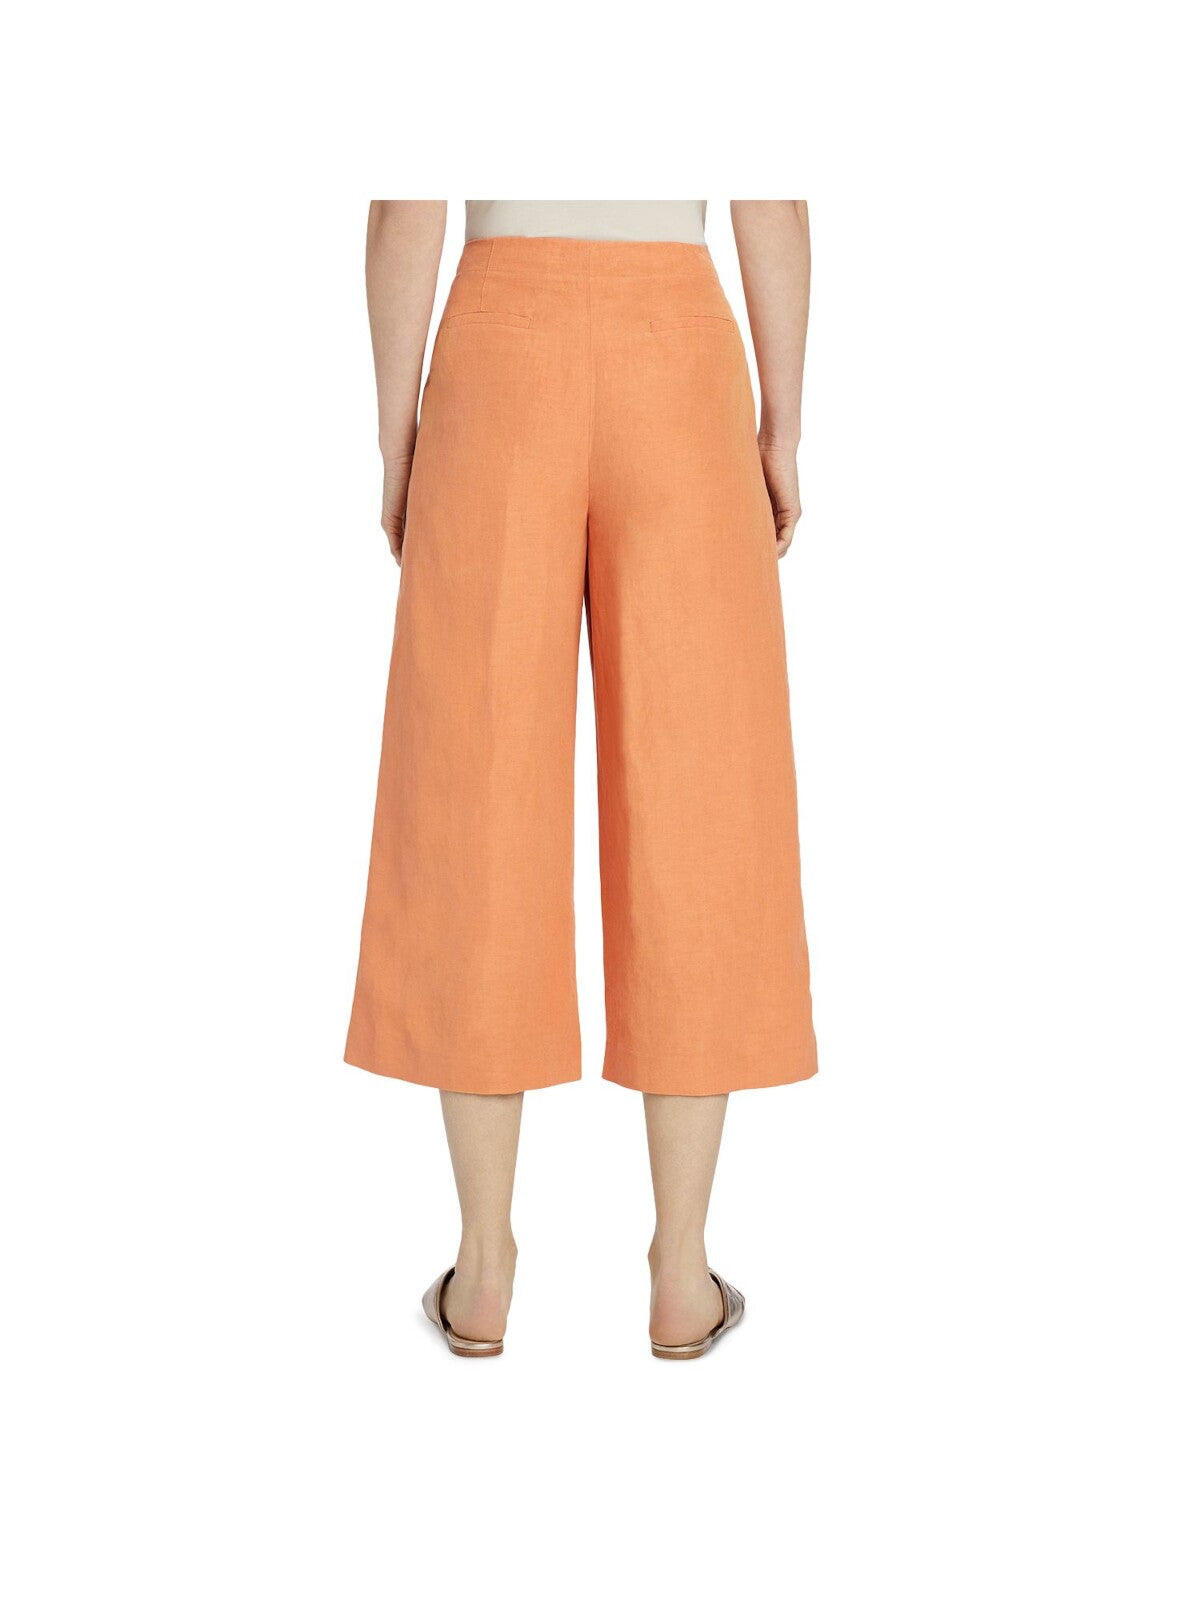 LAFAYETTE 148 Womens Orange Zippered Pocketed Wide Leg Capri High Waist Pants 16